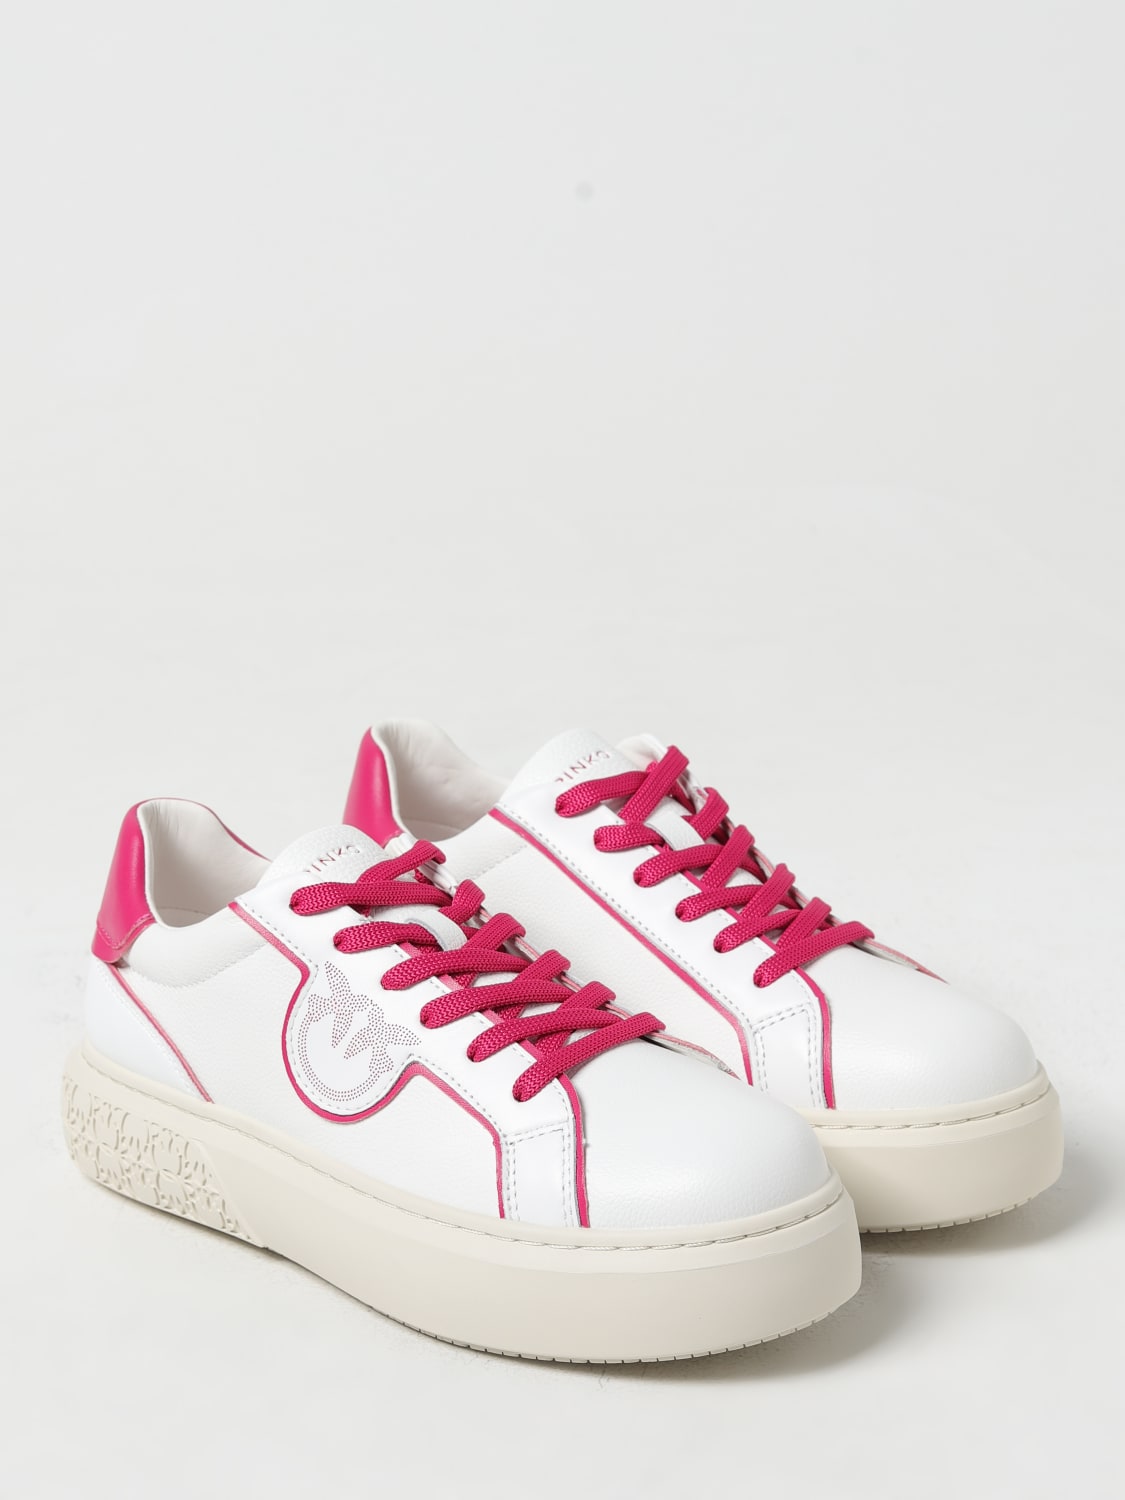 Zapatos PINKO → Calzado de mujer: botas, zapatillas deportivas